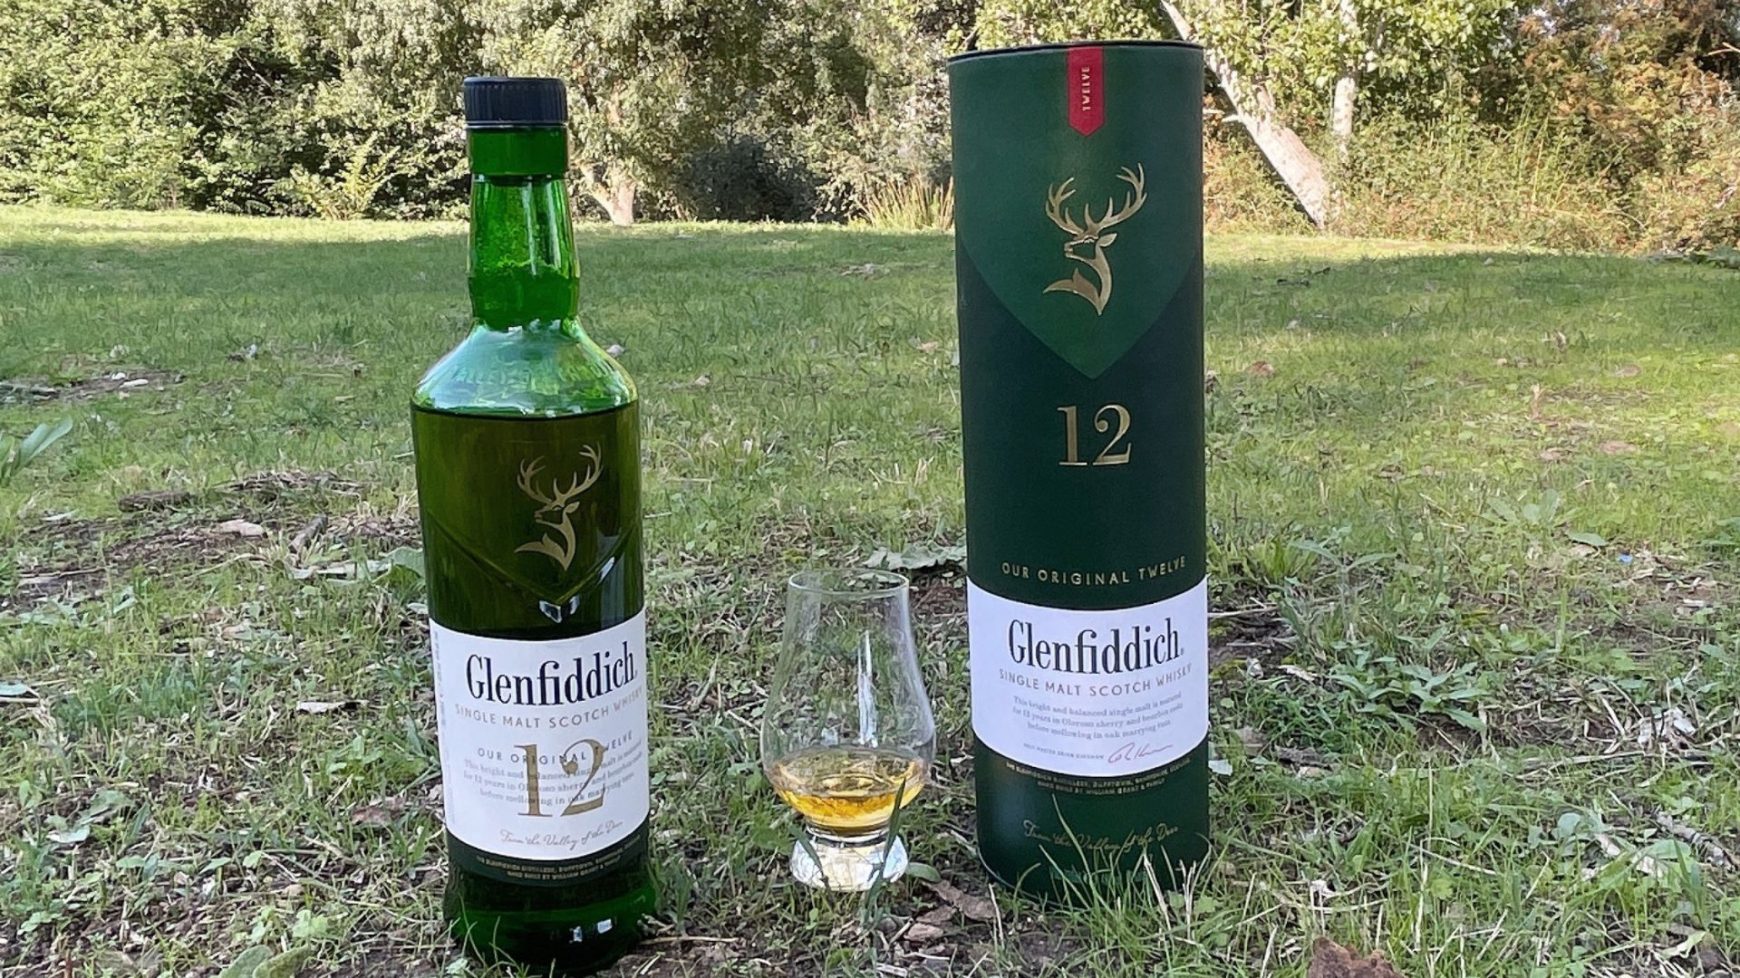 Glenfiddich 12 Years Single Malt Scotch Whisky